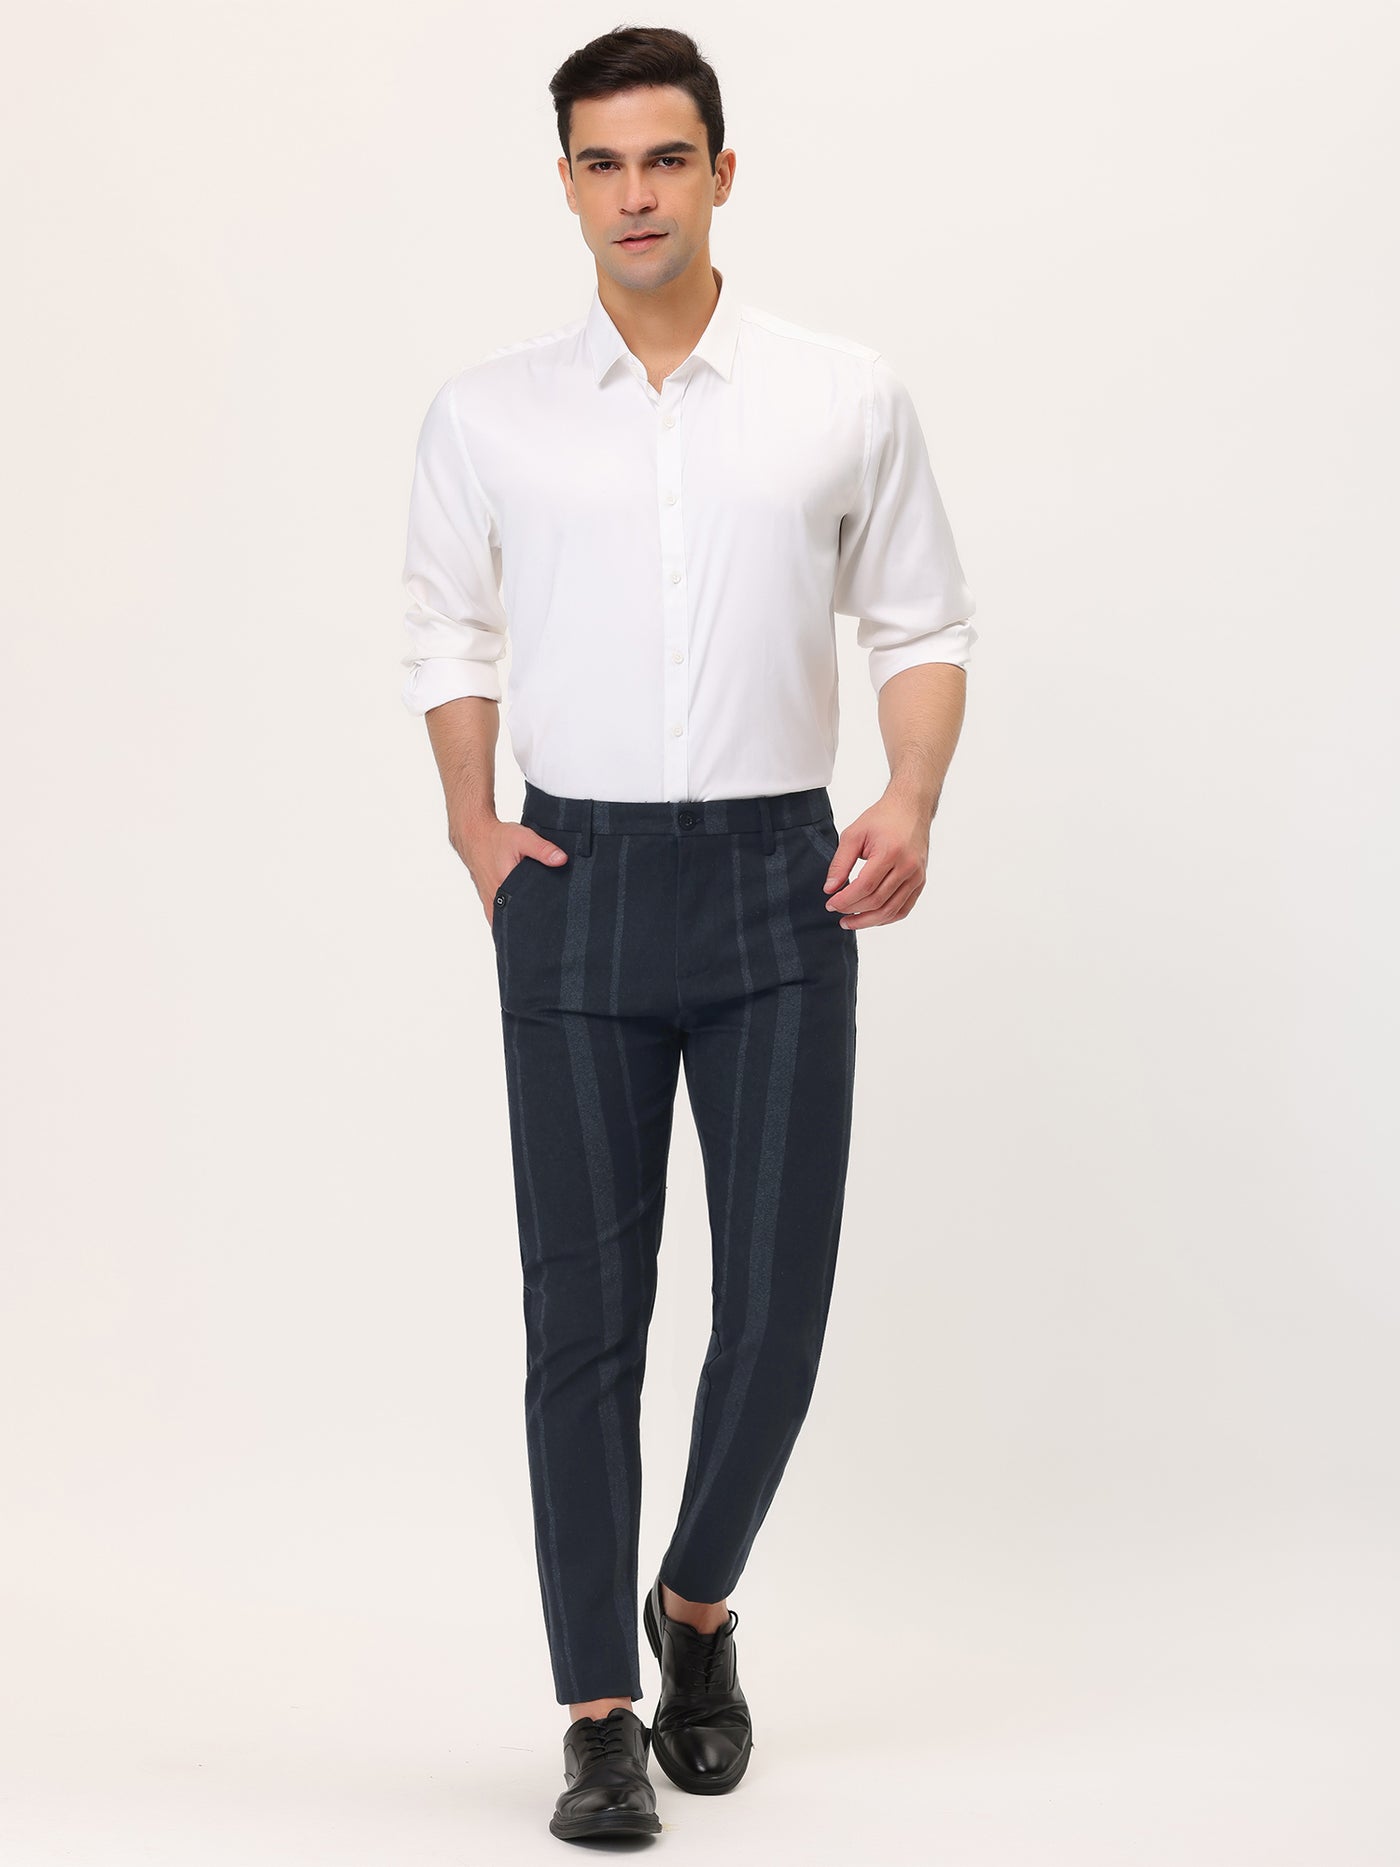 Bublédon Men's Striped Dress Pants Slim Fit Flat Front Business Formal Trousers